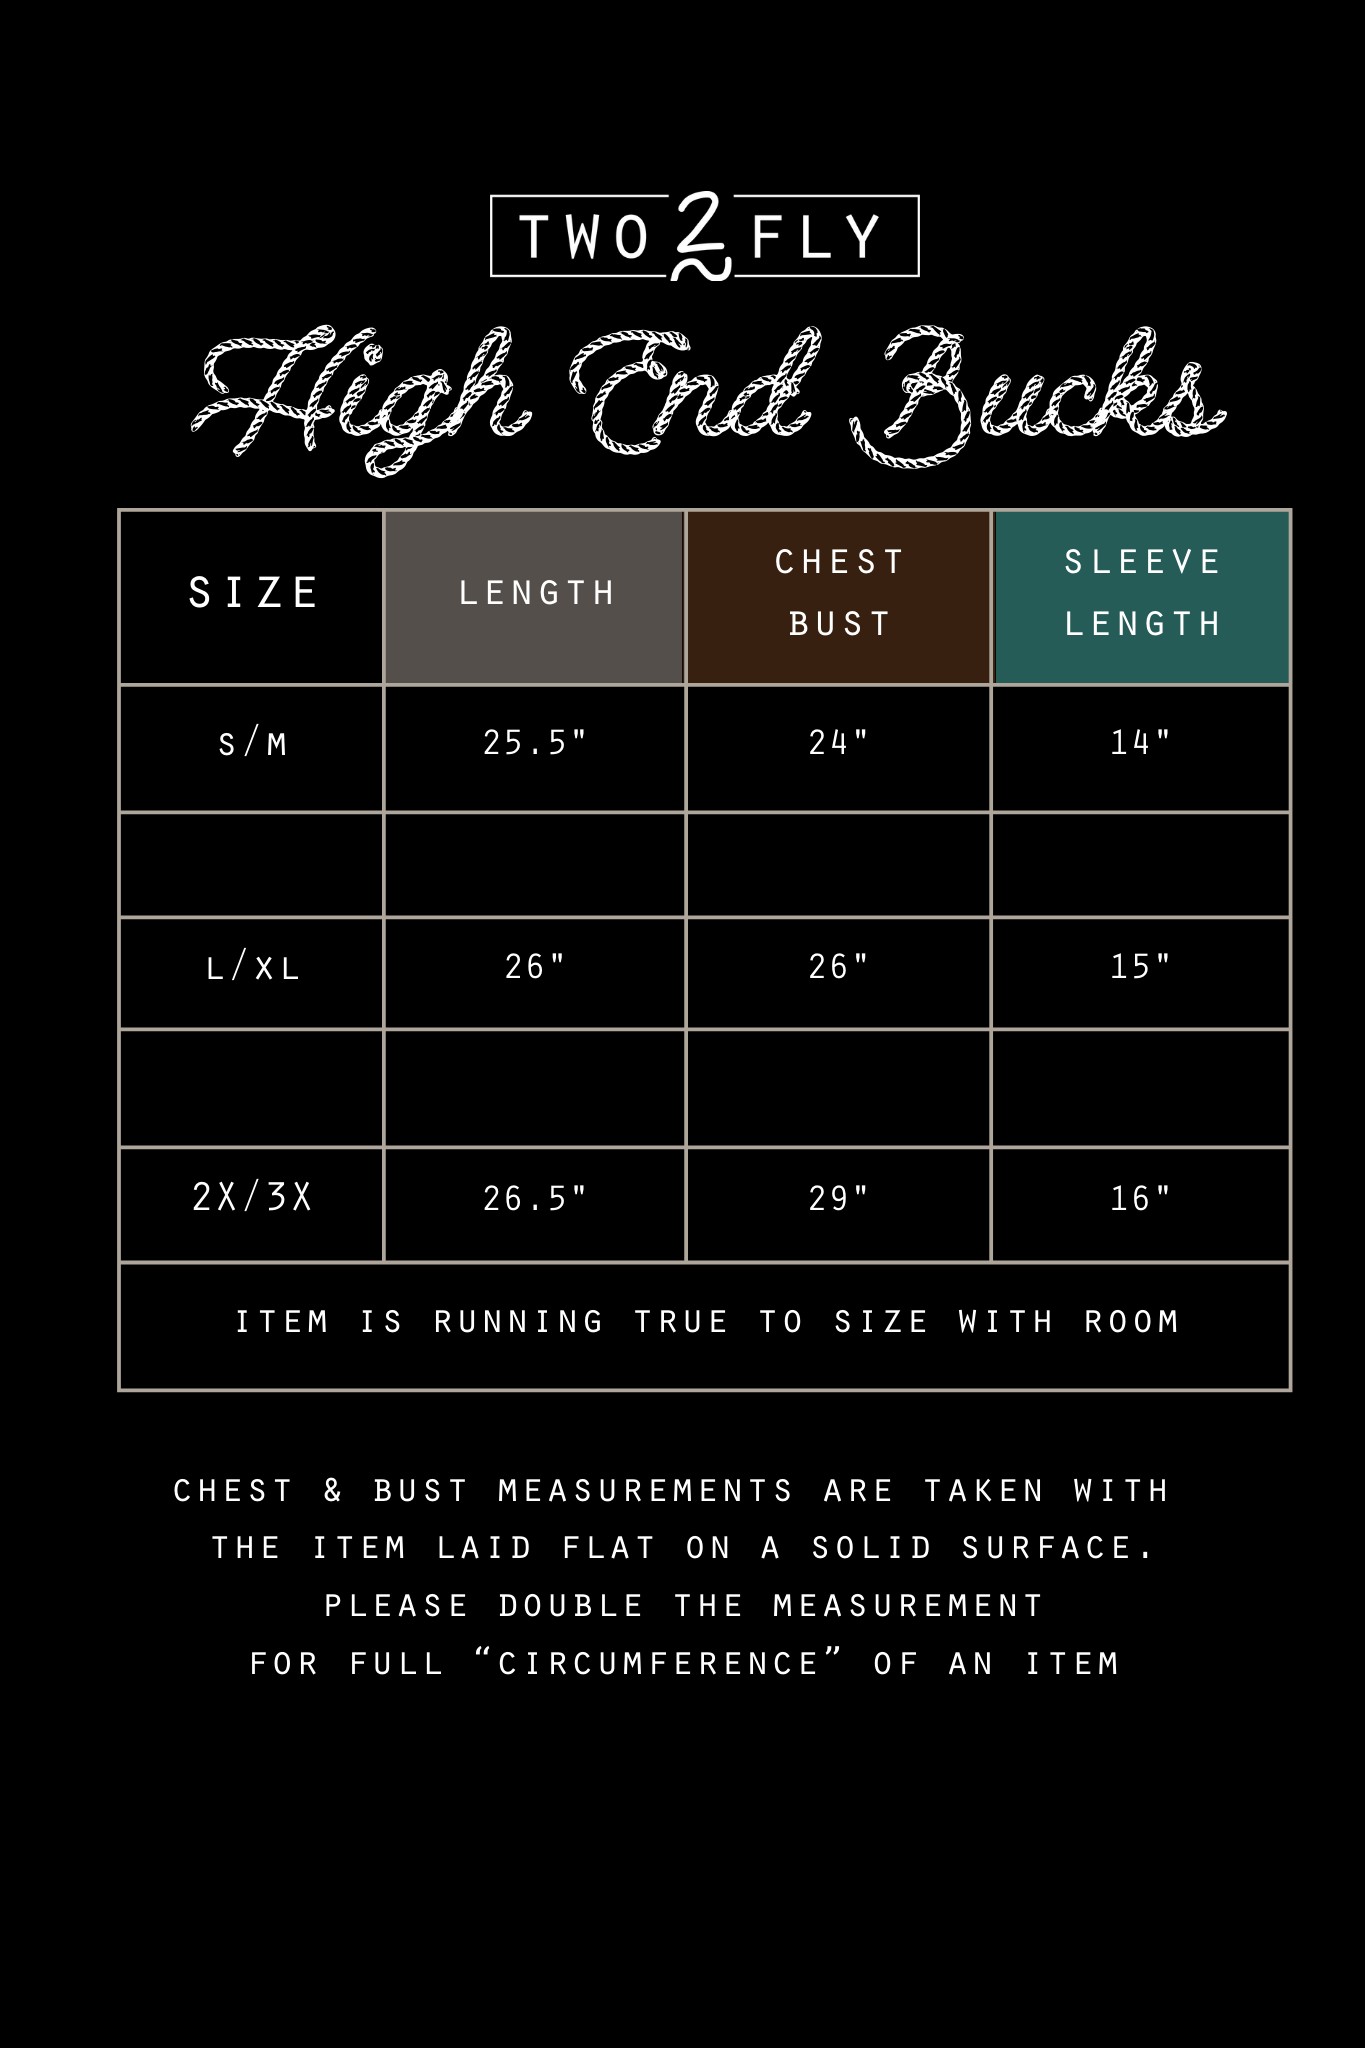 the High |End| Bucks top